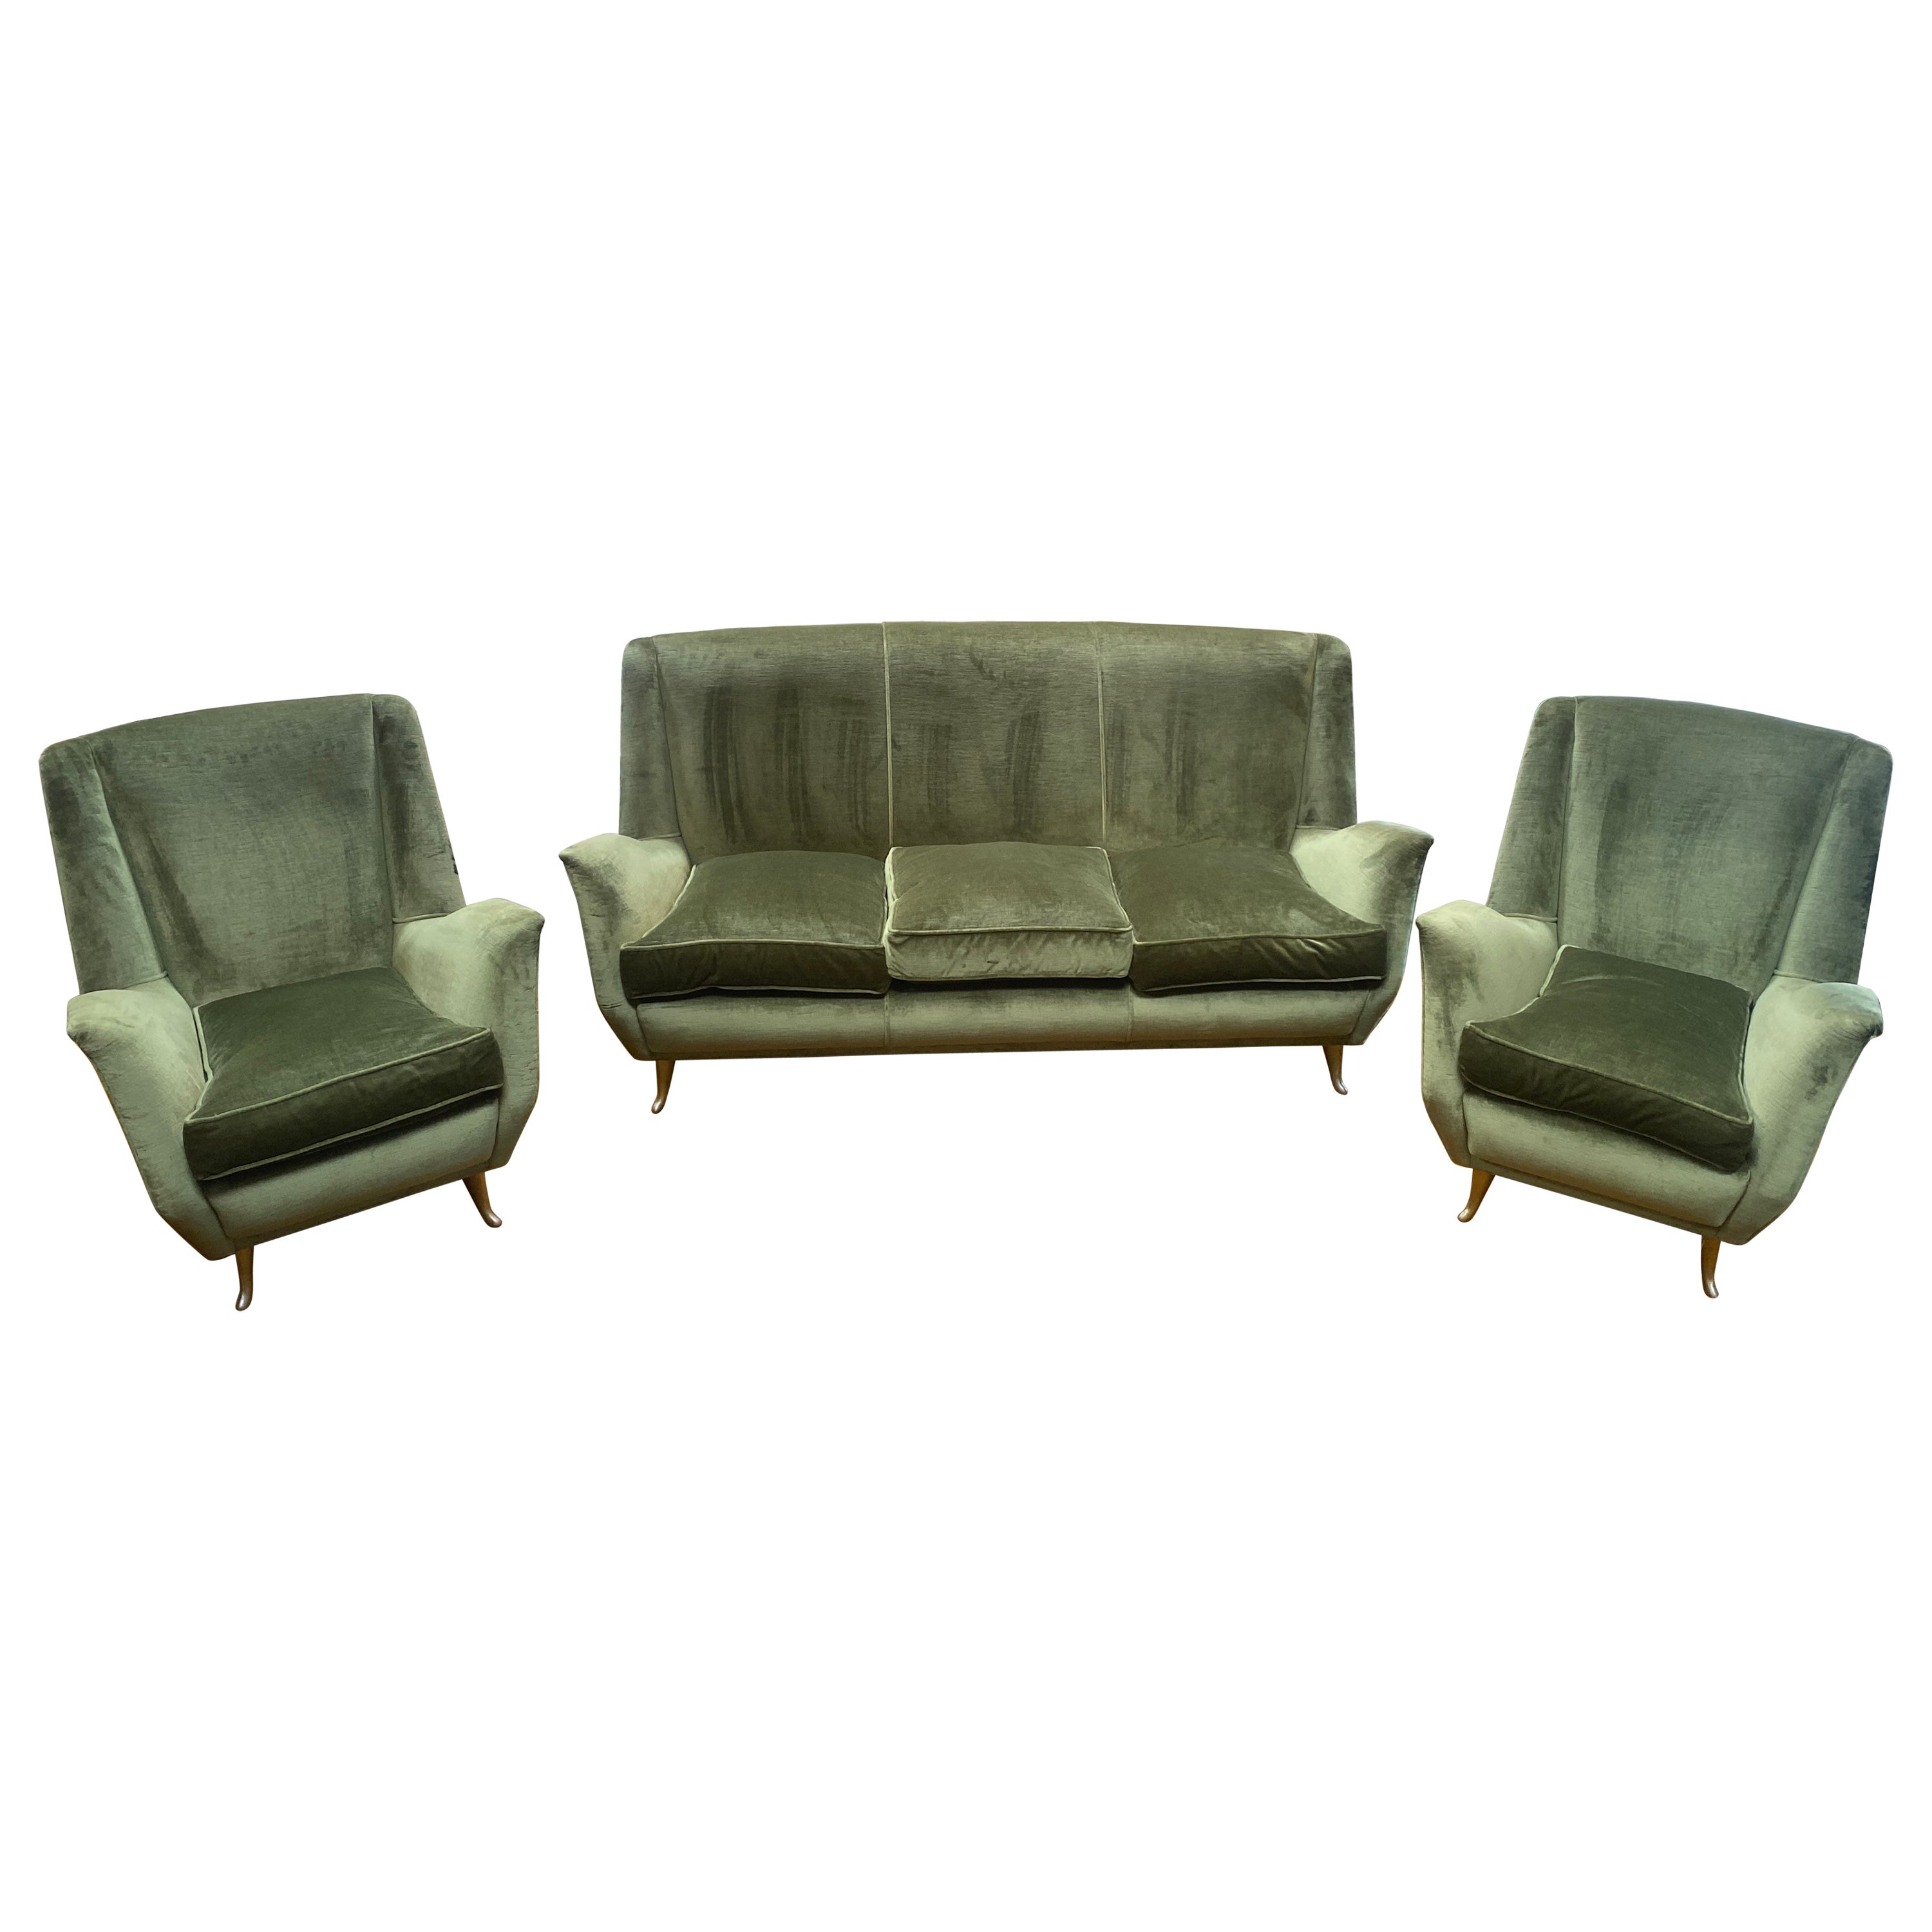 Italian Midcentury Modern Sofa by ISA, 1955